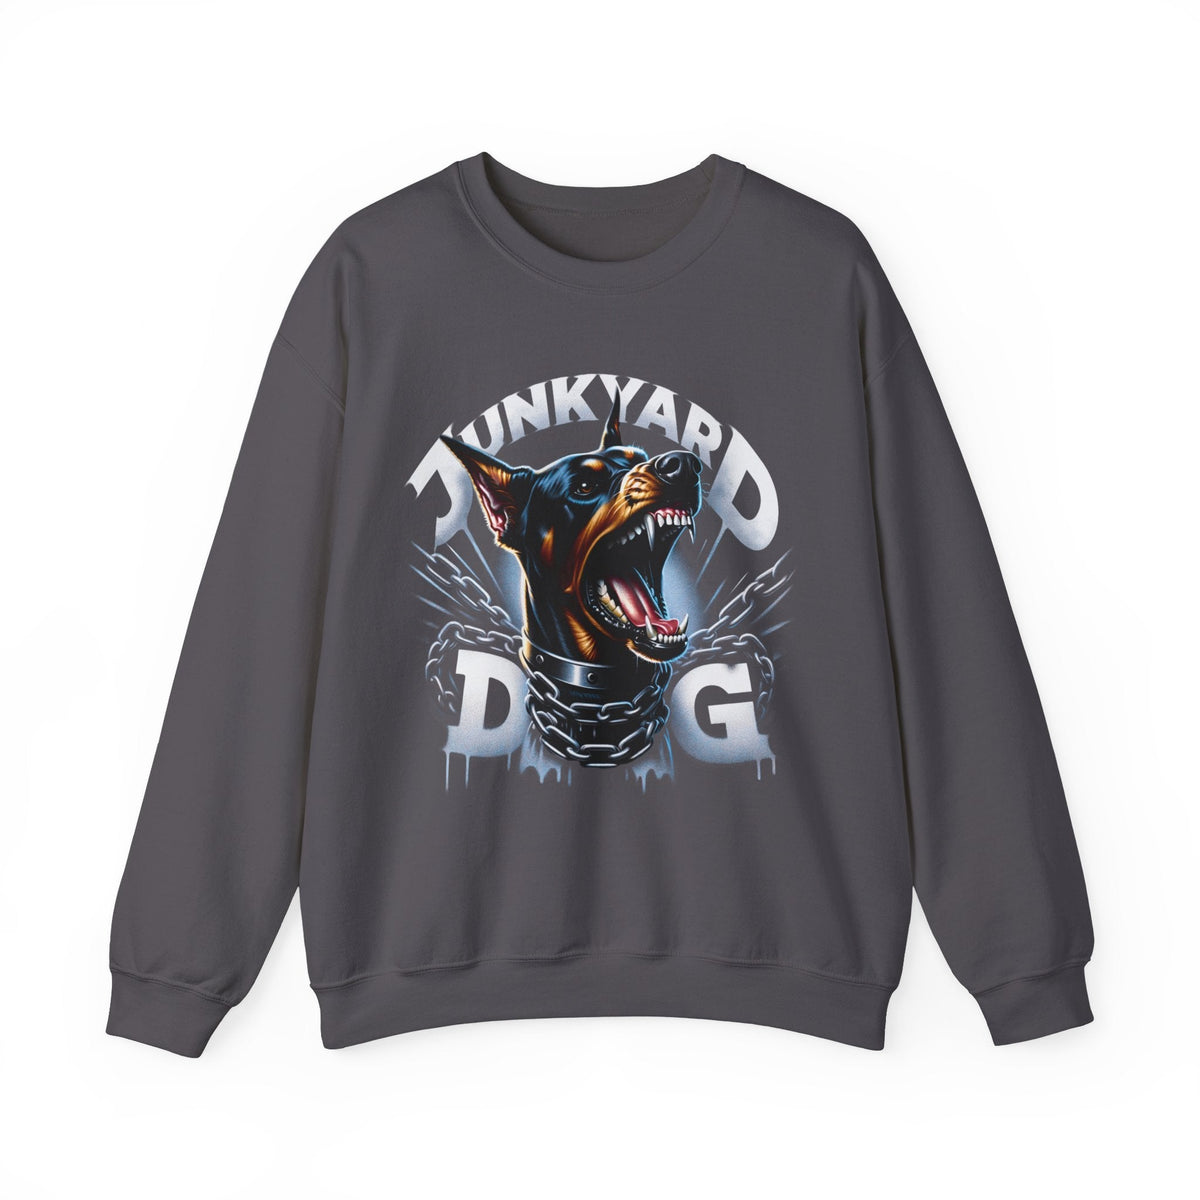 Junkyard Dog Crewneck Sweatshirt - Goth Cloth Co.Sweatshirt22075825884448420988